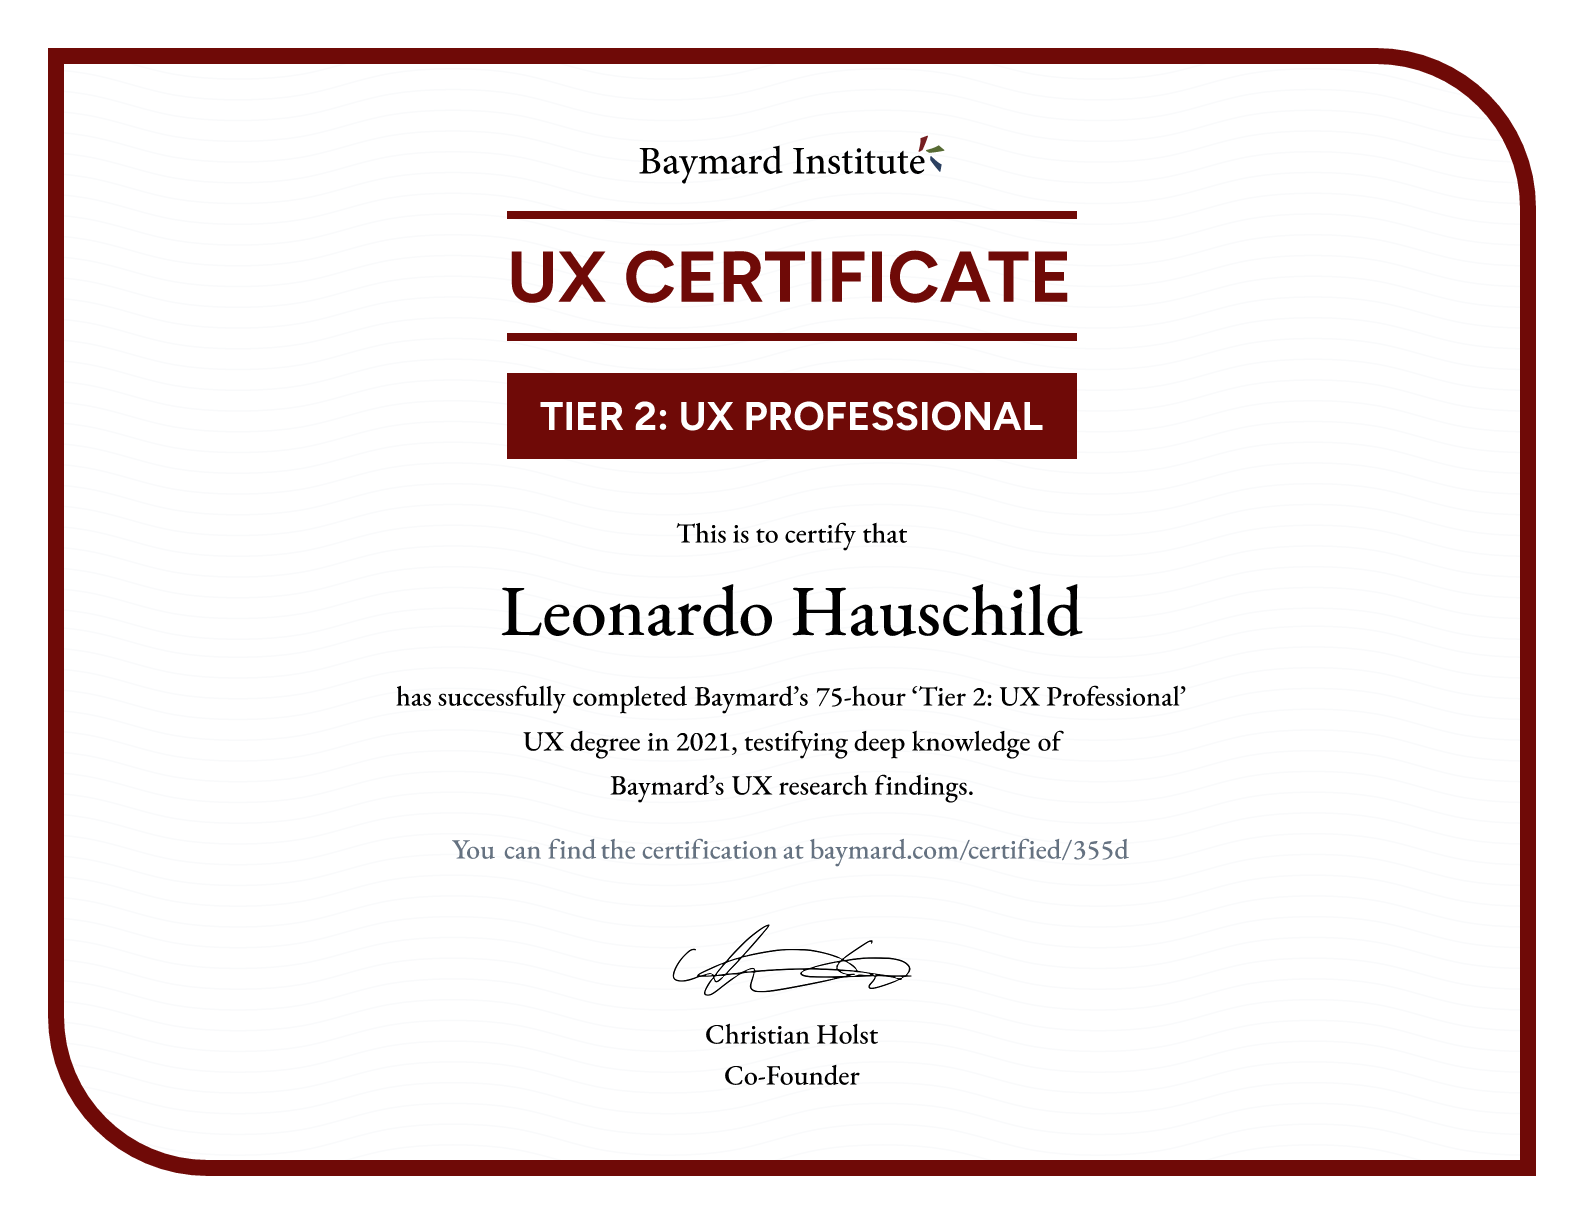 Leonardo Hauschild’s certificate